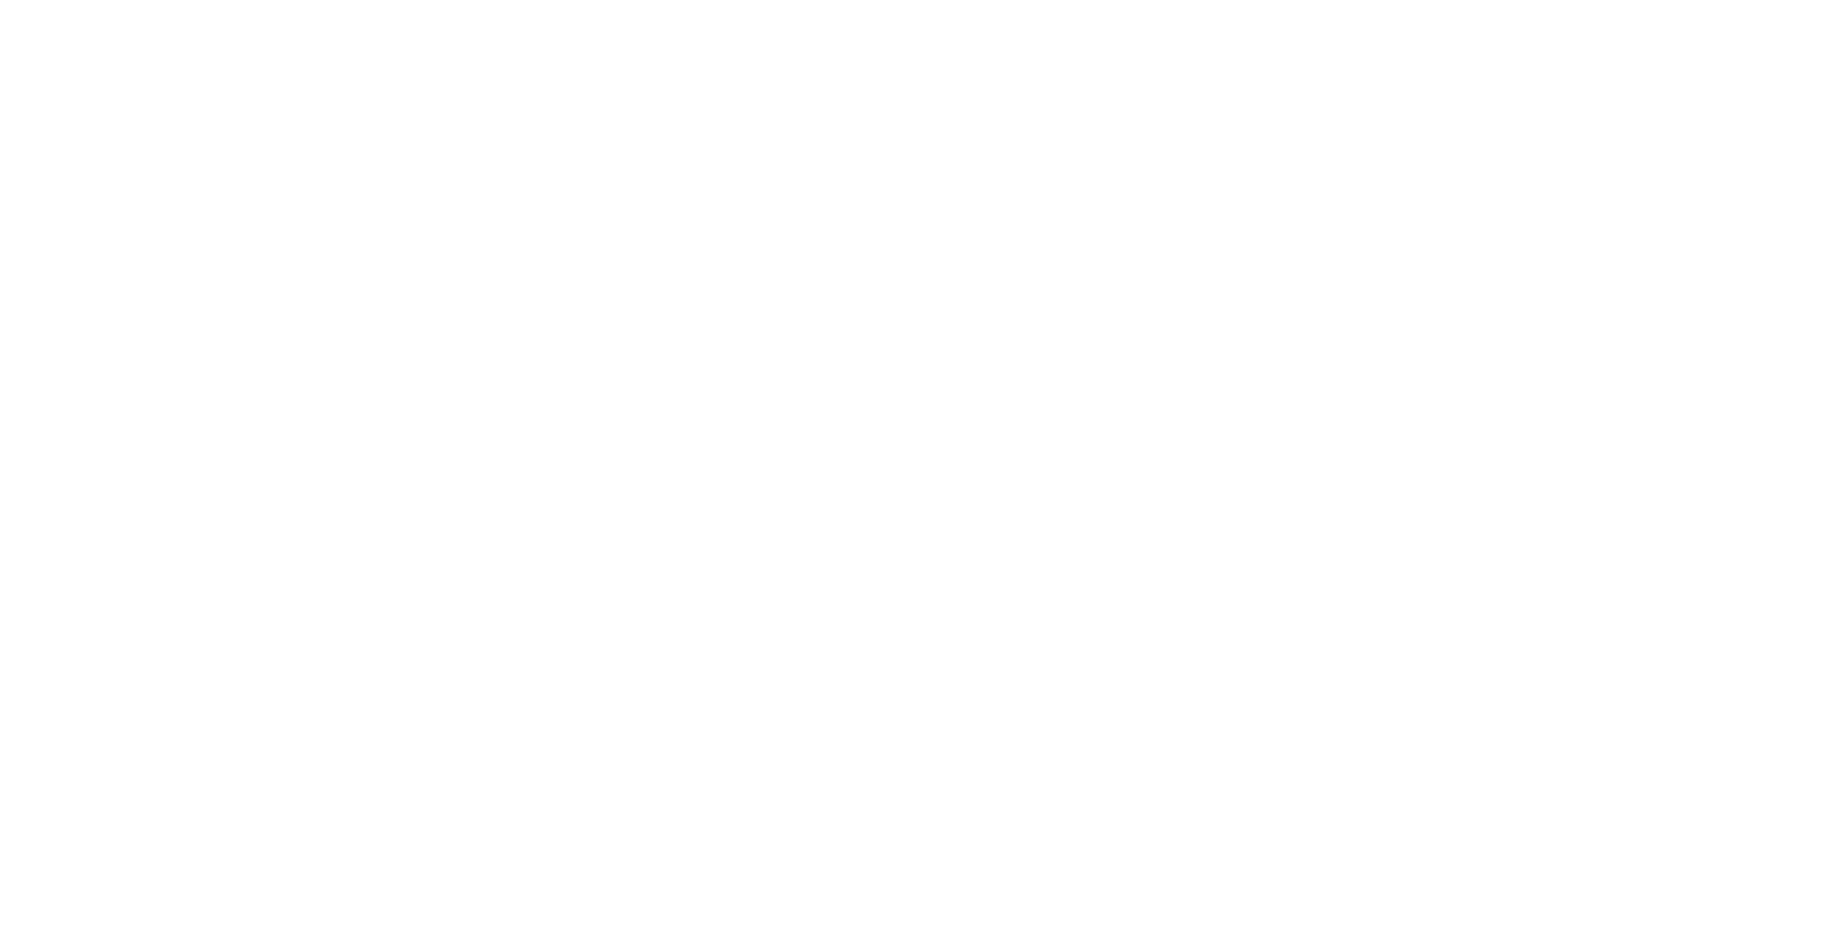 Acadiana Logo - Community Foundation of Acadiana